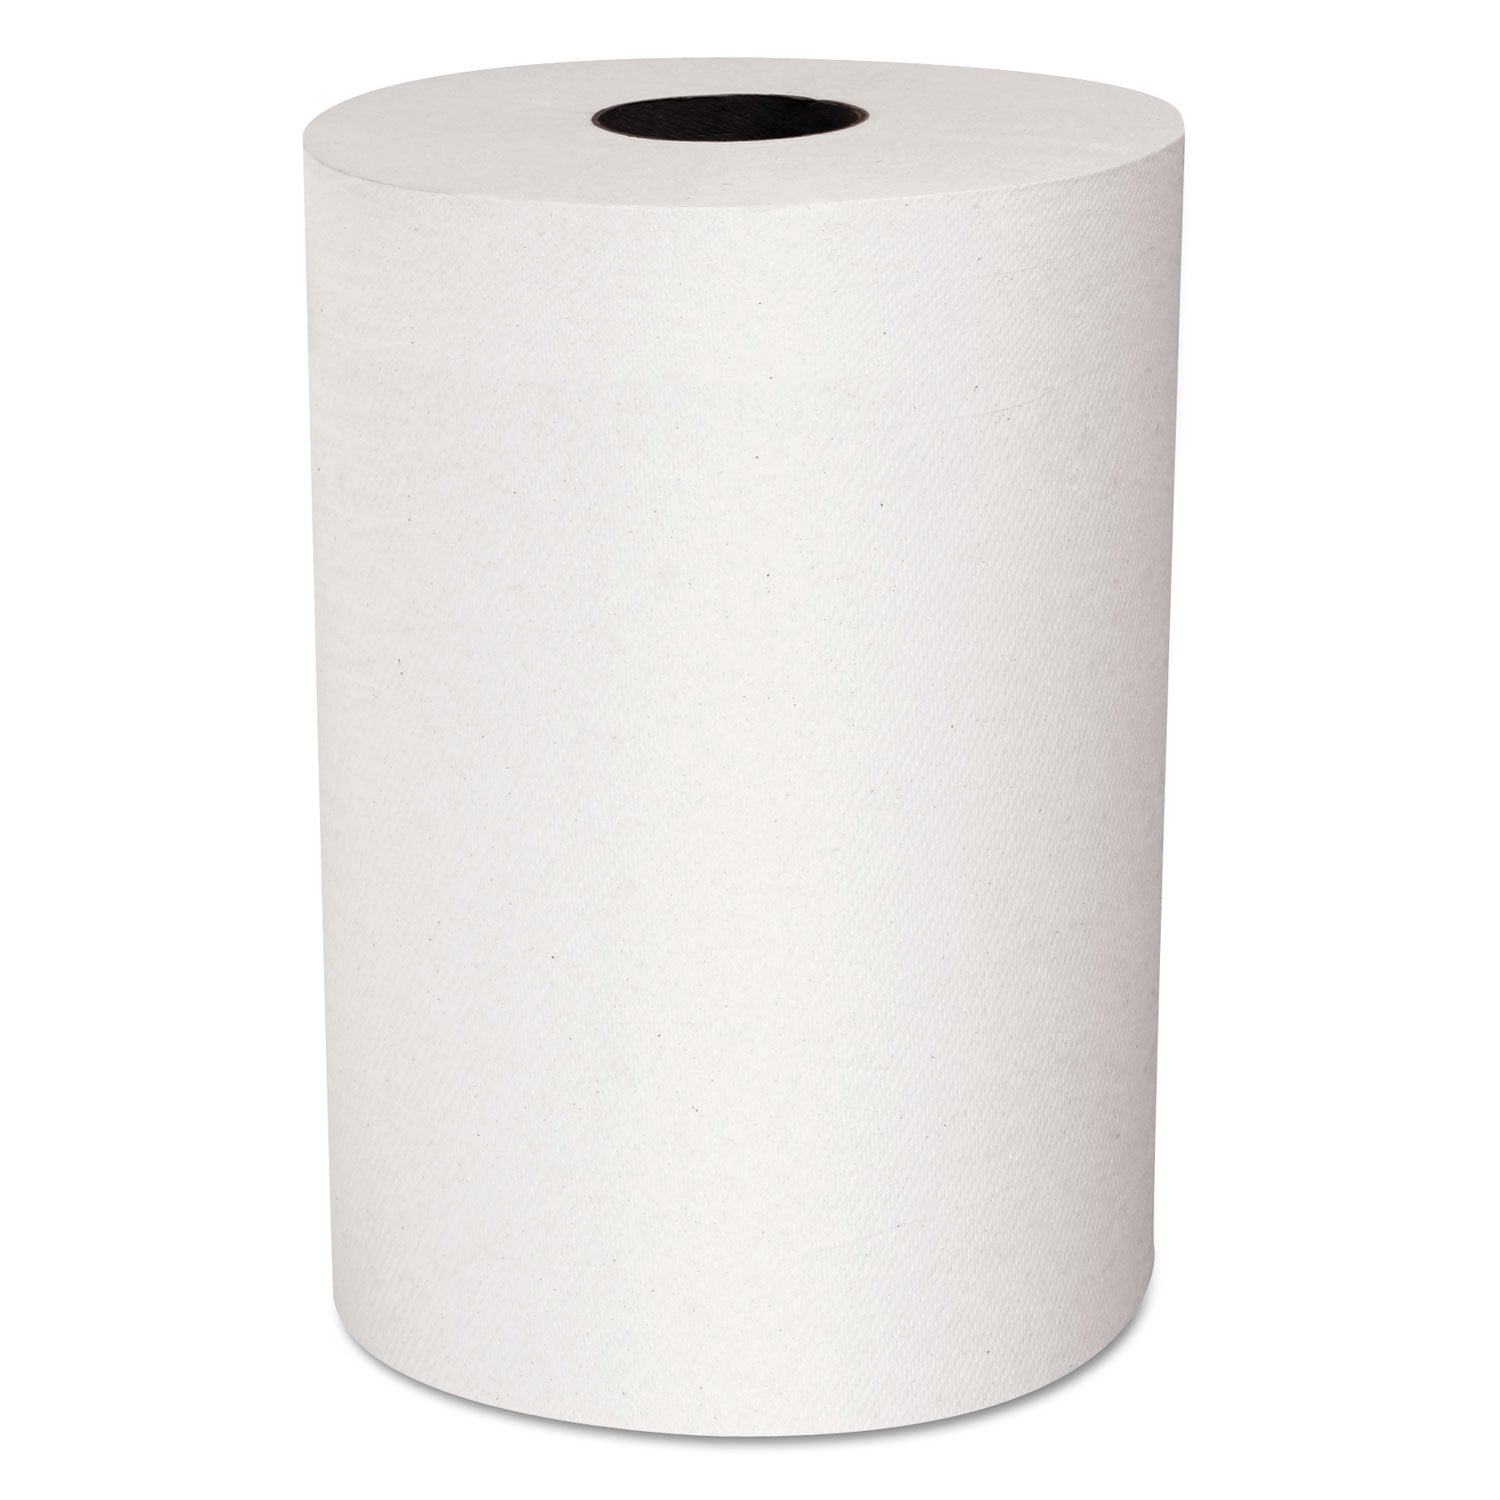 Slimroll Towels, Absorbency Pockets, 8" x 580 ft, White, 6 Rolls/Carton - 